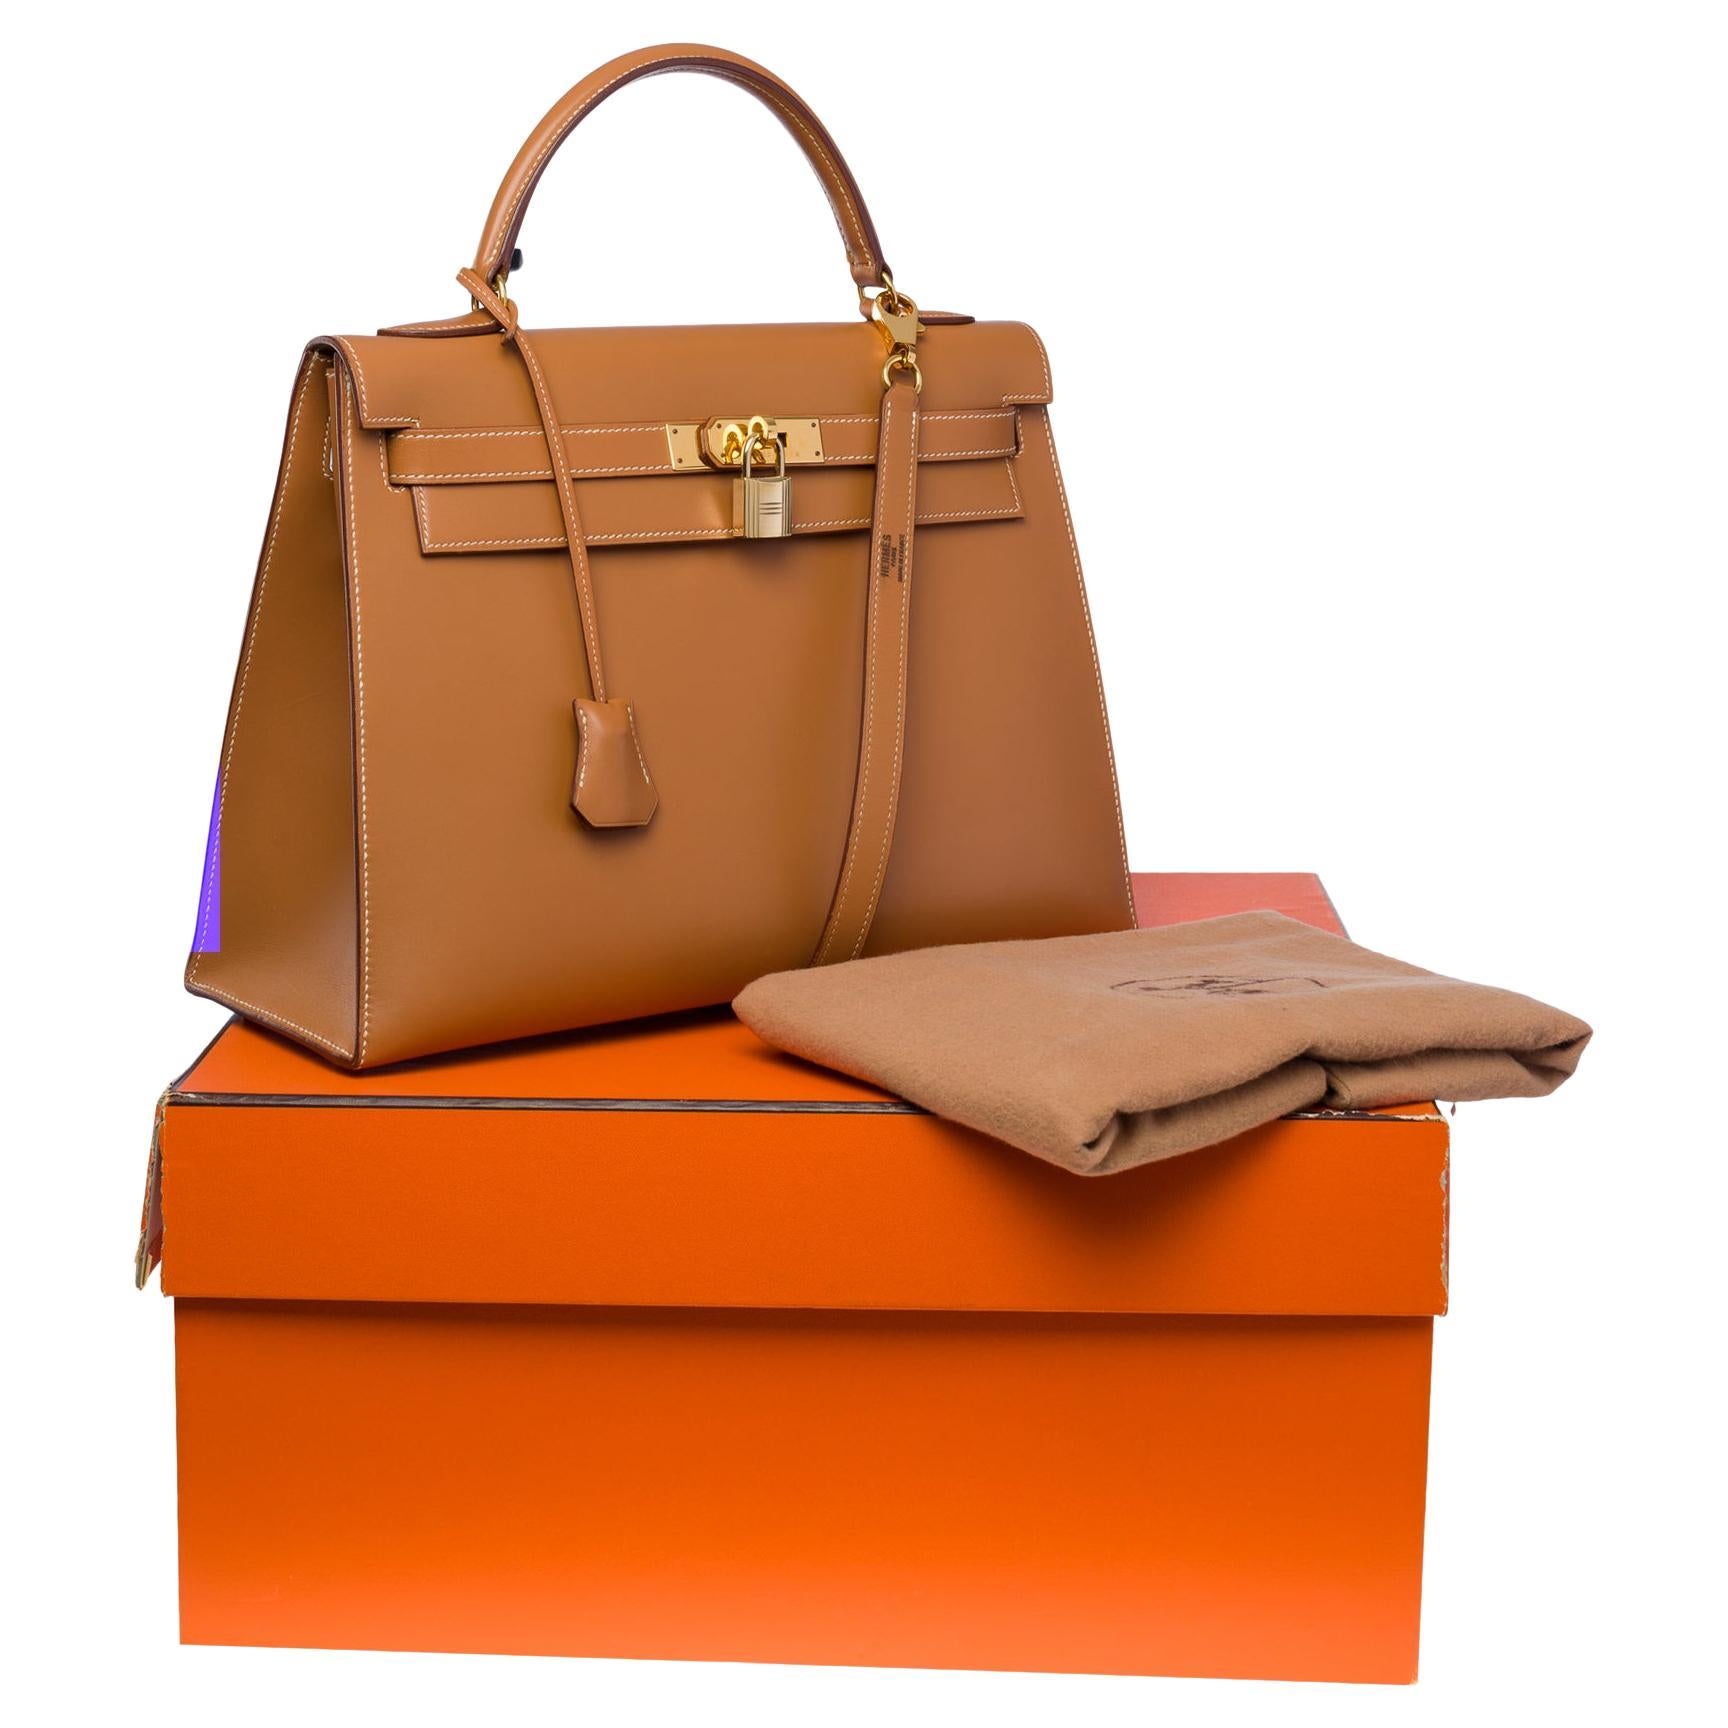 Very Rare Hermès Kelly 32 sellier handbag strap in Gold Chamonix leather , GHW